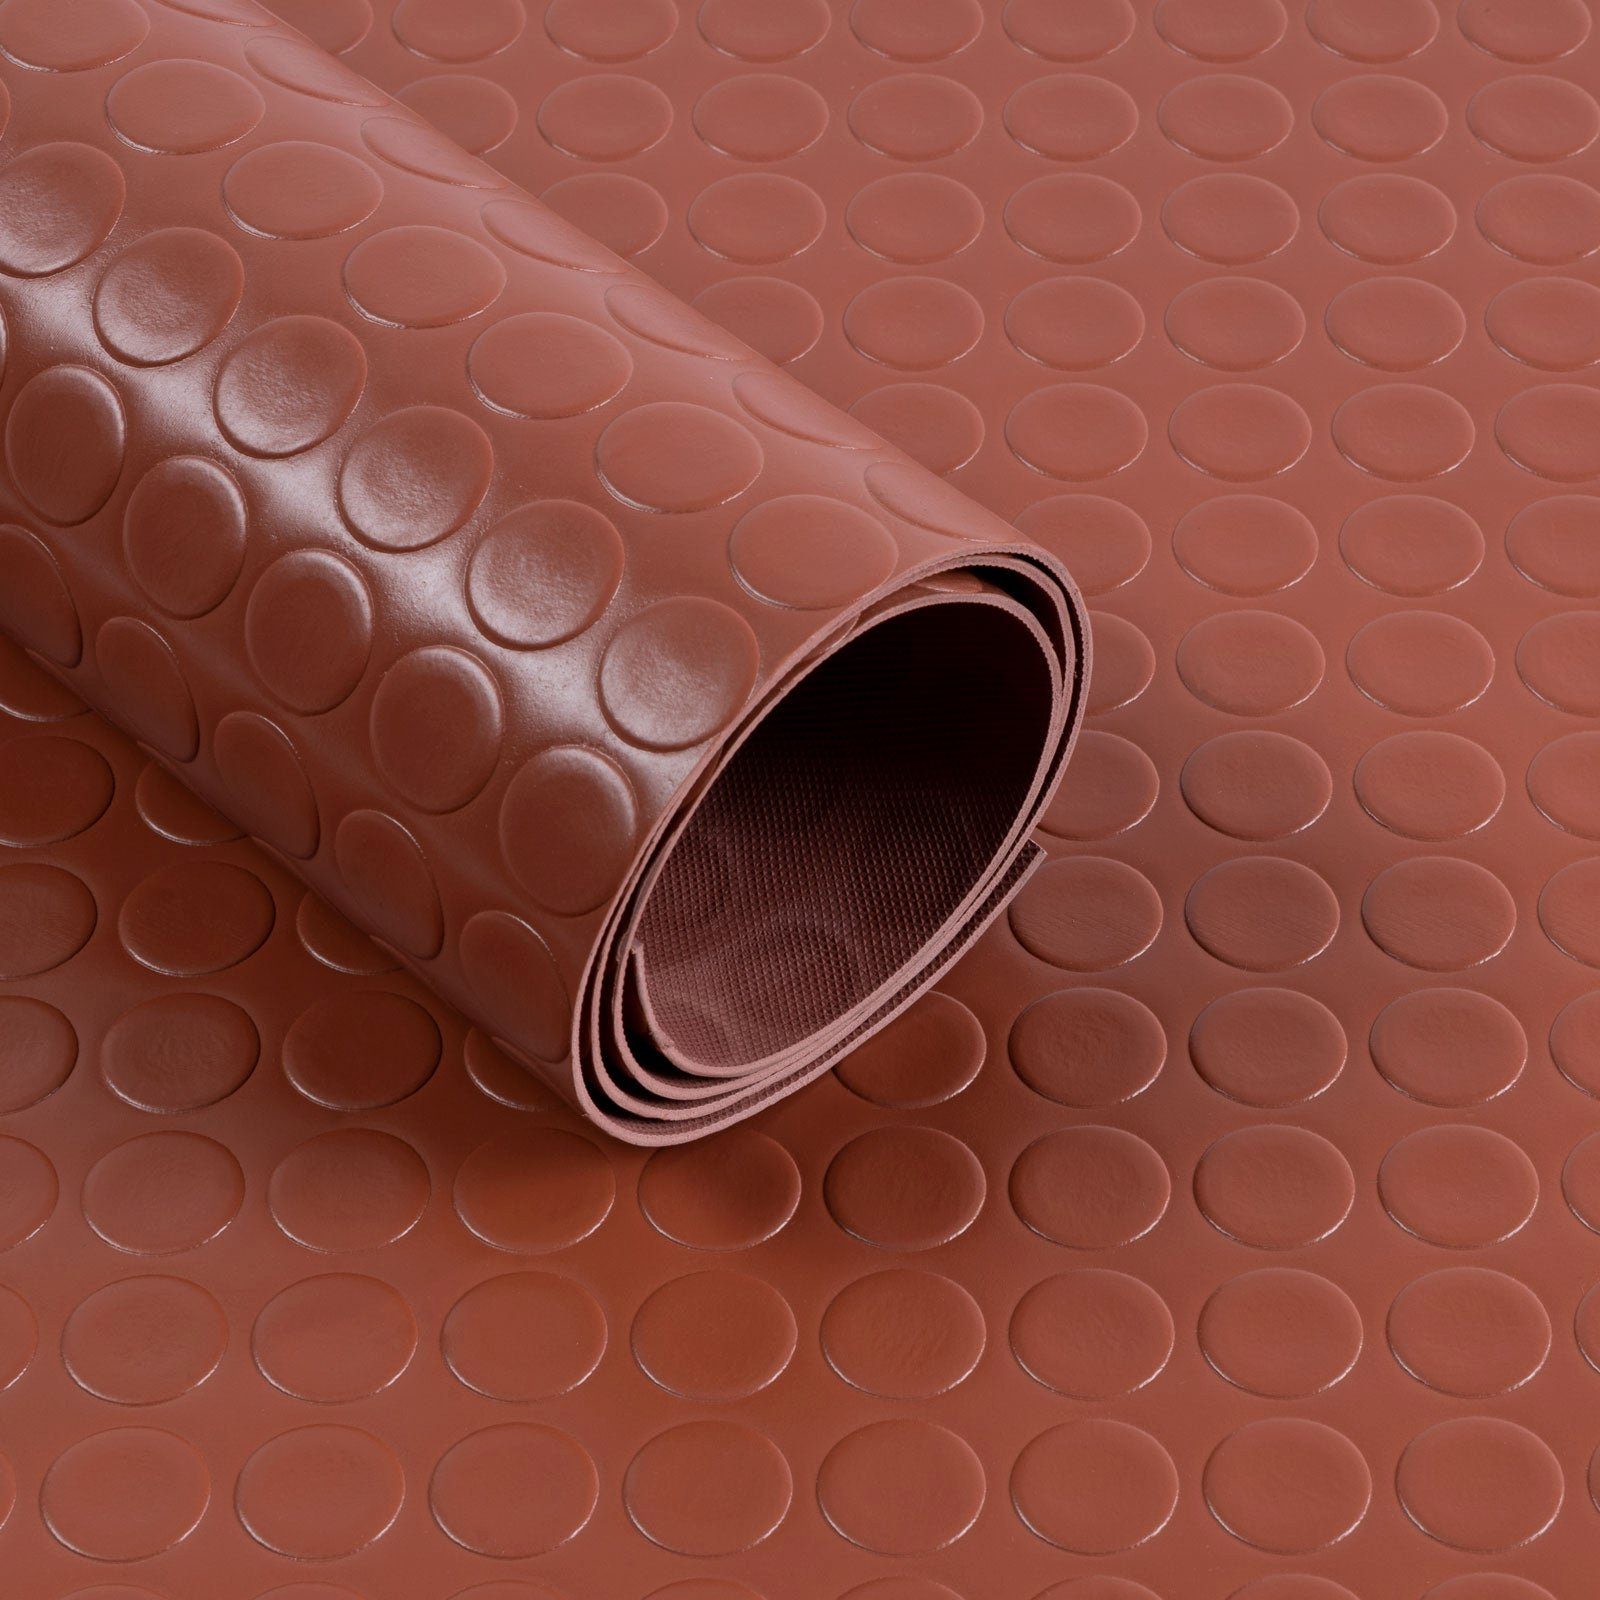 PVC-Bodenbelag, viele Stärke 2mm, Bodenschutzmatte Terracotta Kubus Noppen, Farben Große